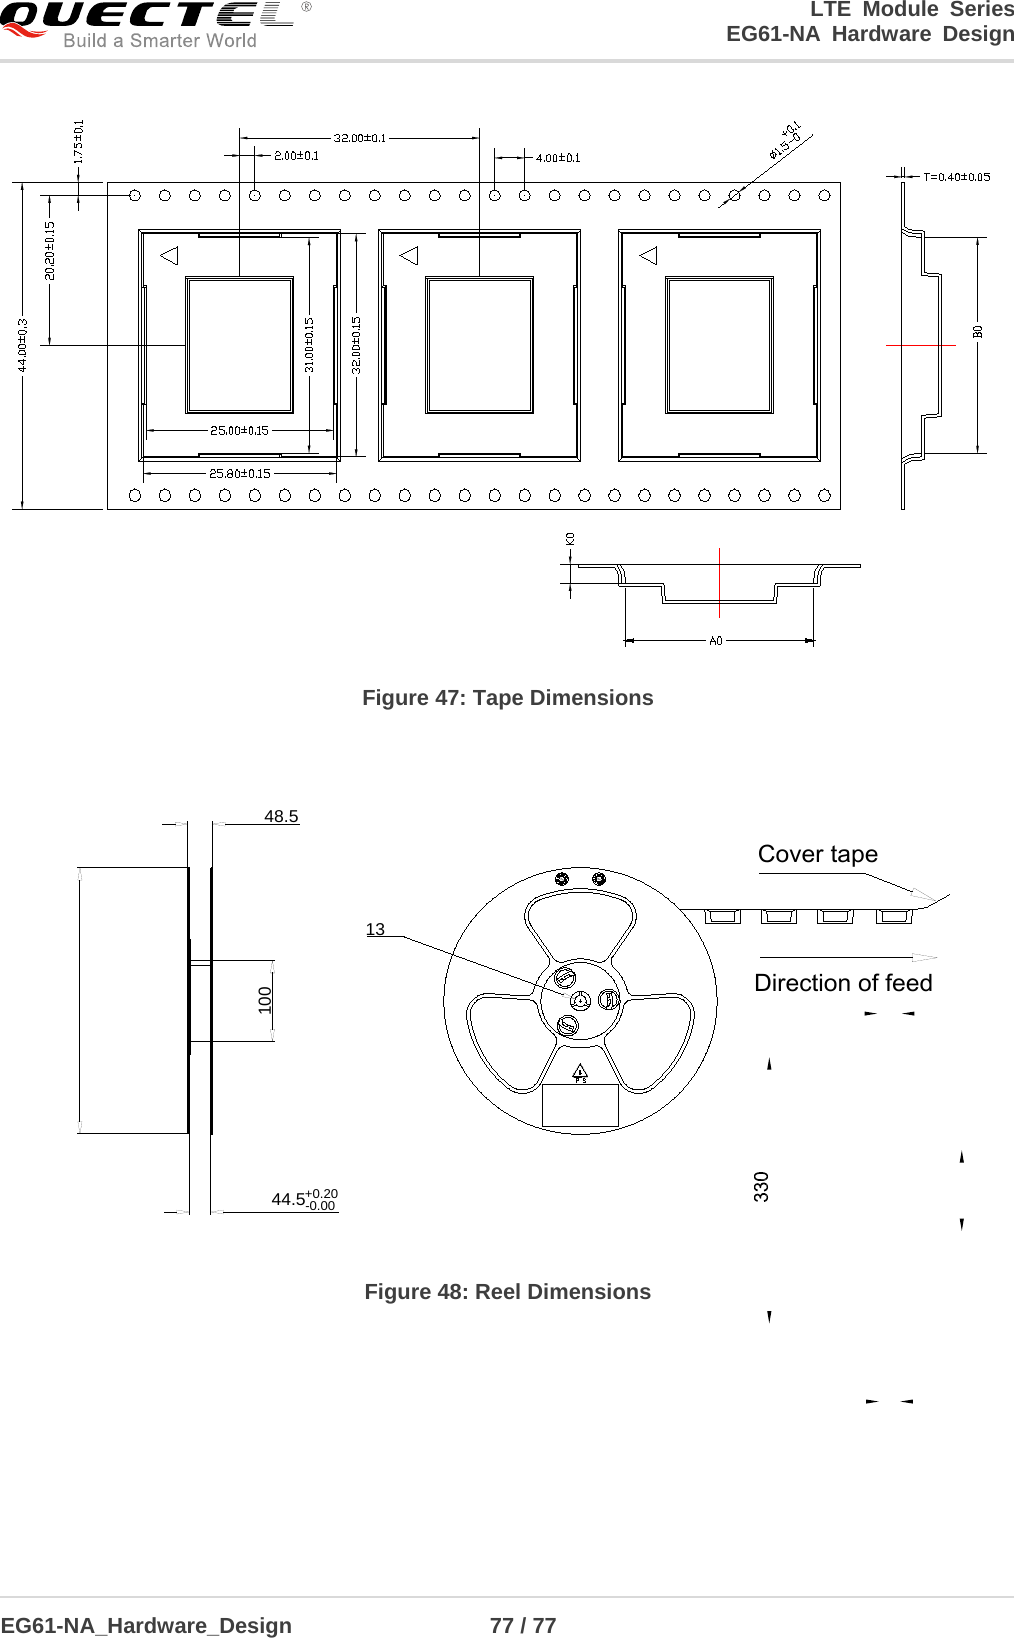 LTE Module Series                                                  EG61-NA Hardware Design  EG61-NA_Hardware_Design                  77 / 77     Figure 47: Tape Dimensions  Direction of feedCover tape1310044.5+0.20-0.0048.5 Figure 48: Reel Dimensions 